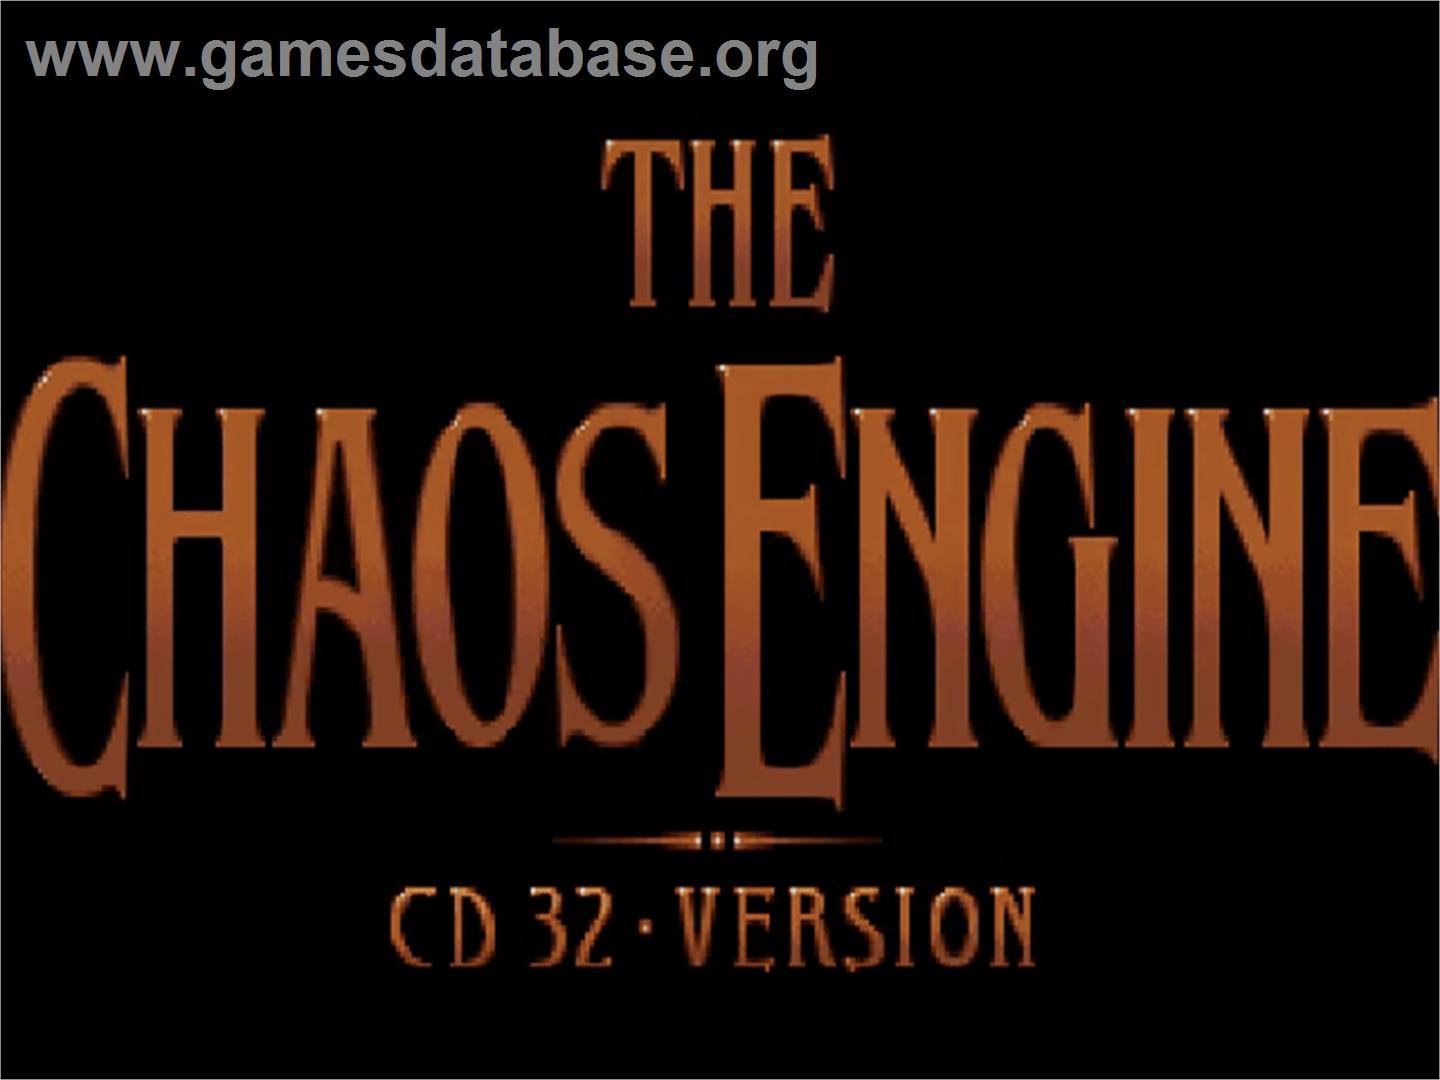 Chaos Engine - Commodore Amiga CD32 - Artwork - Title Screen